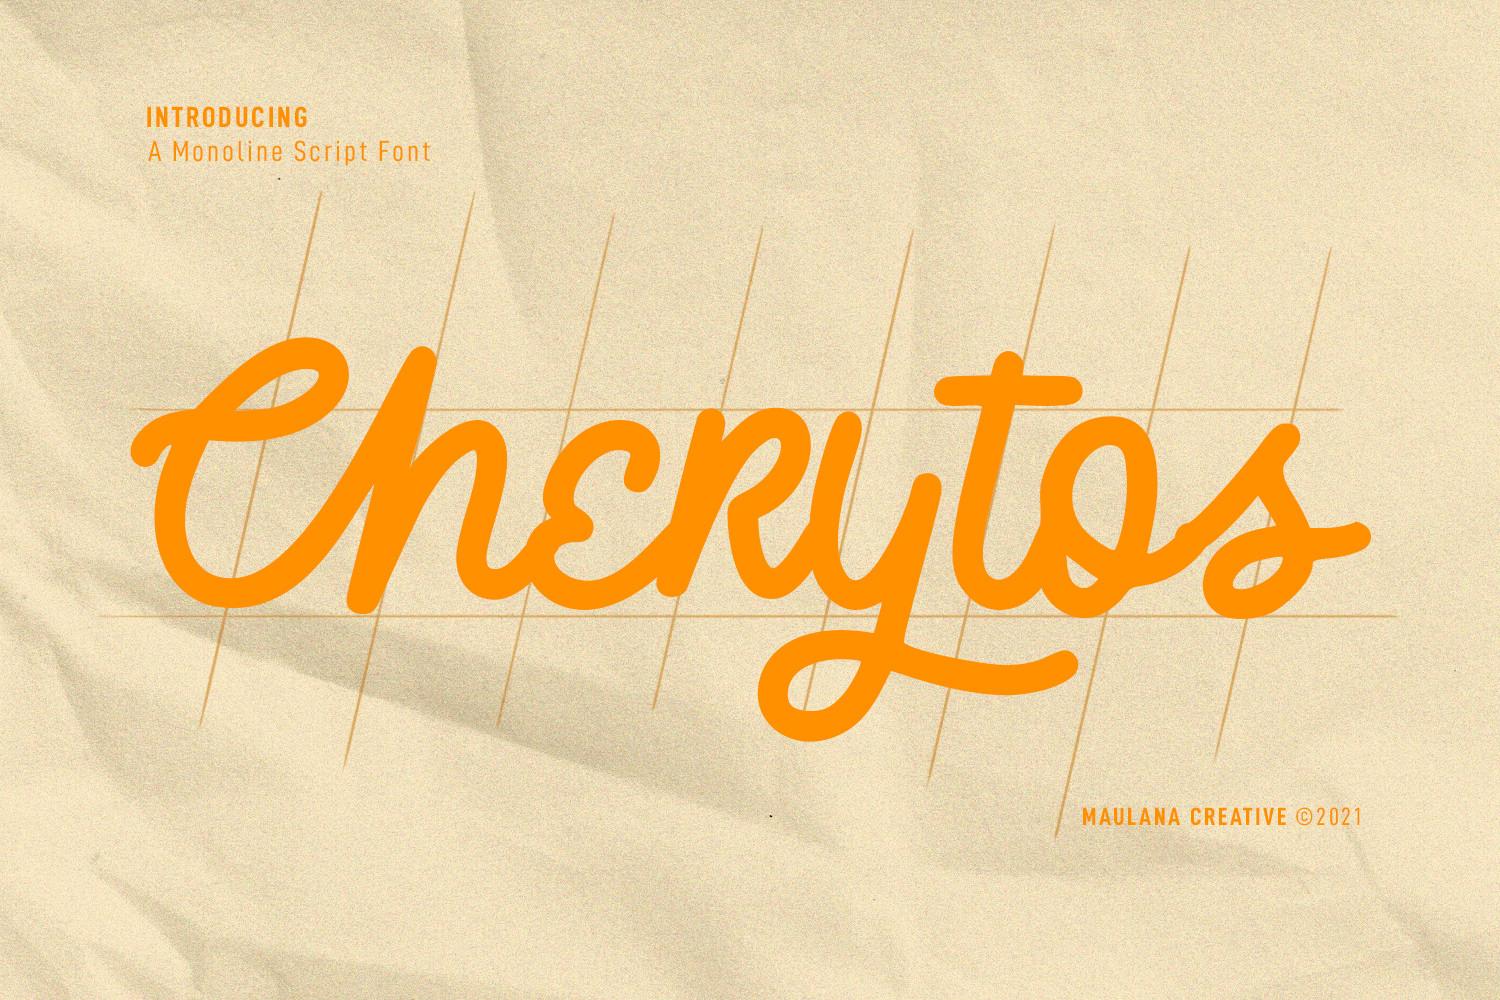 Cherytos Script Font